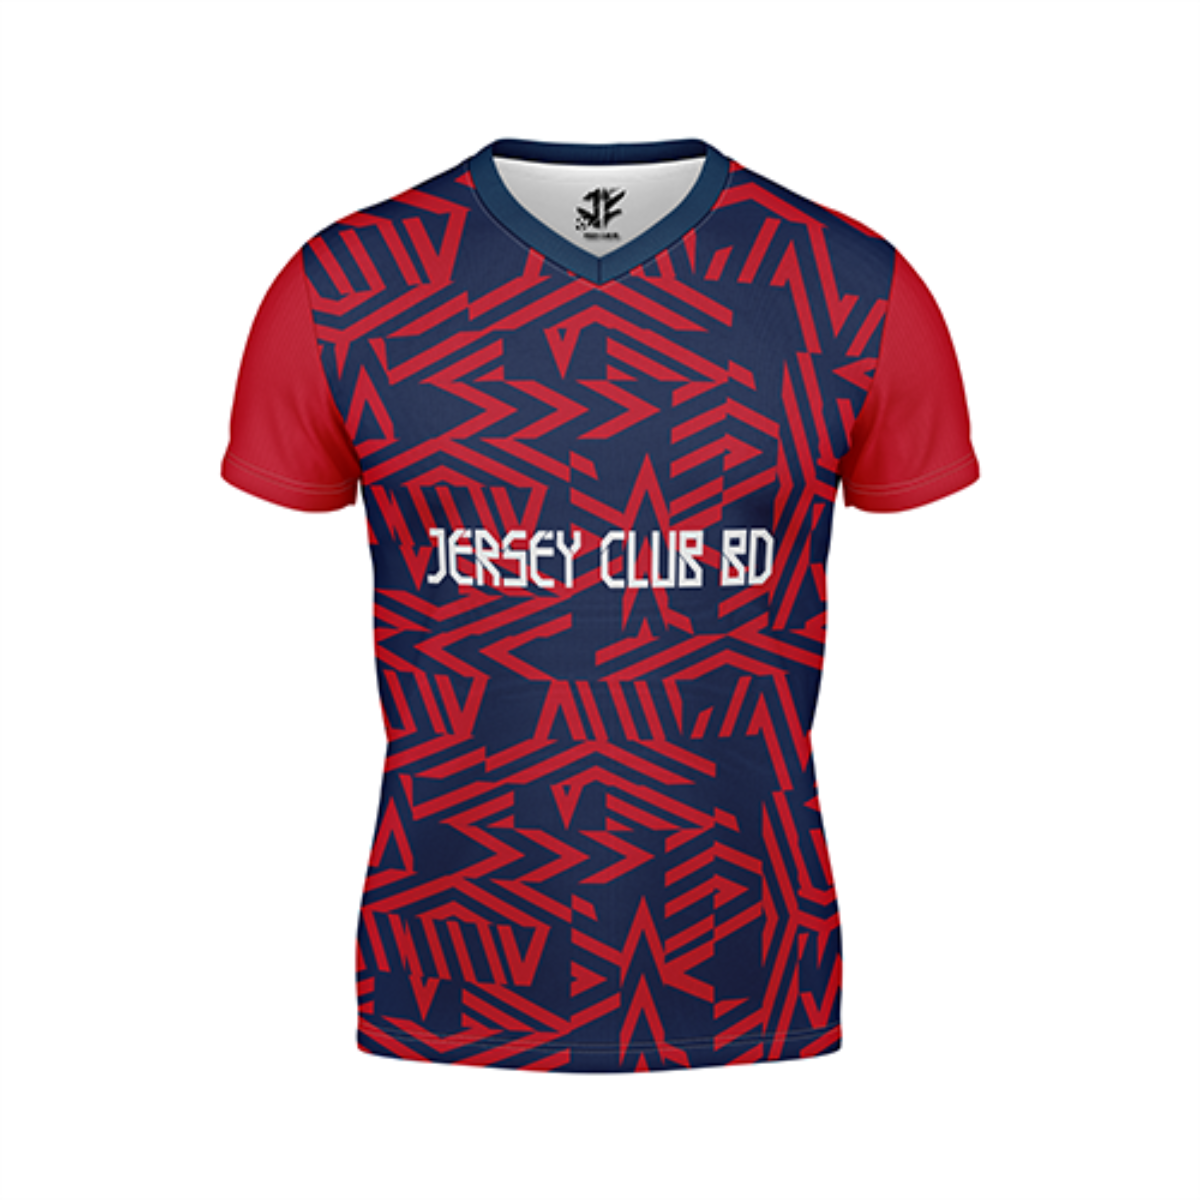 Football Jersey Design  Customized #1 - Jersey Club BD